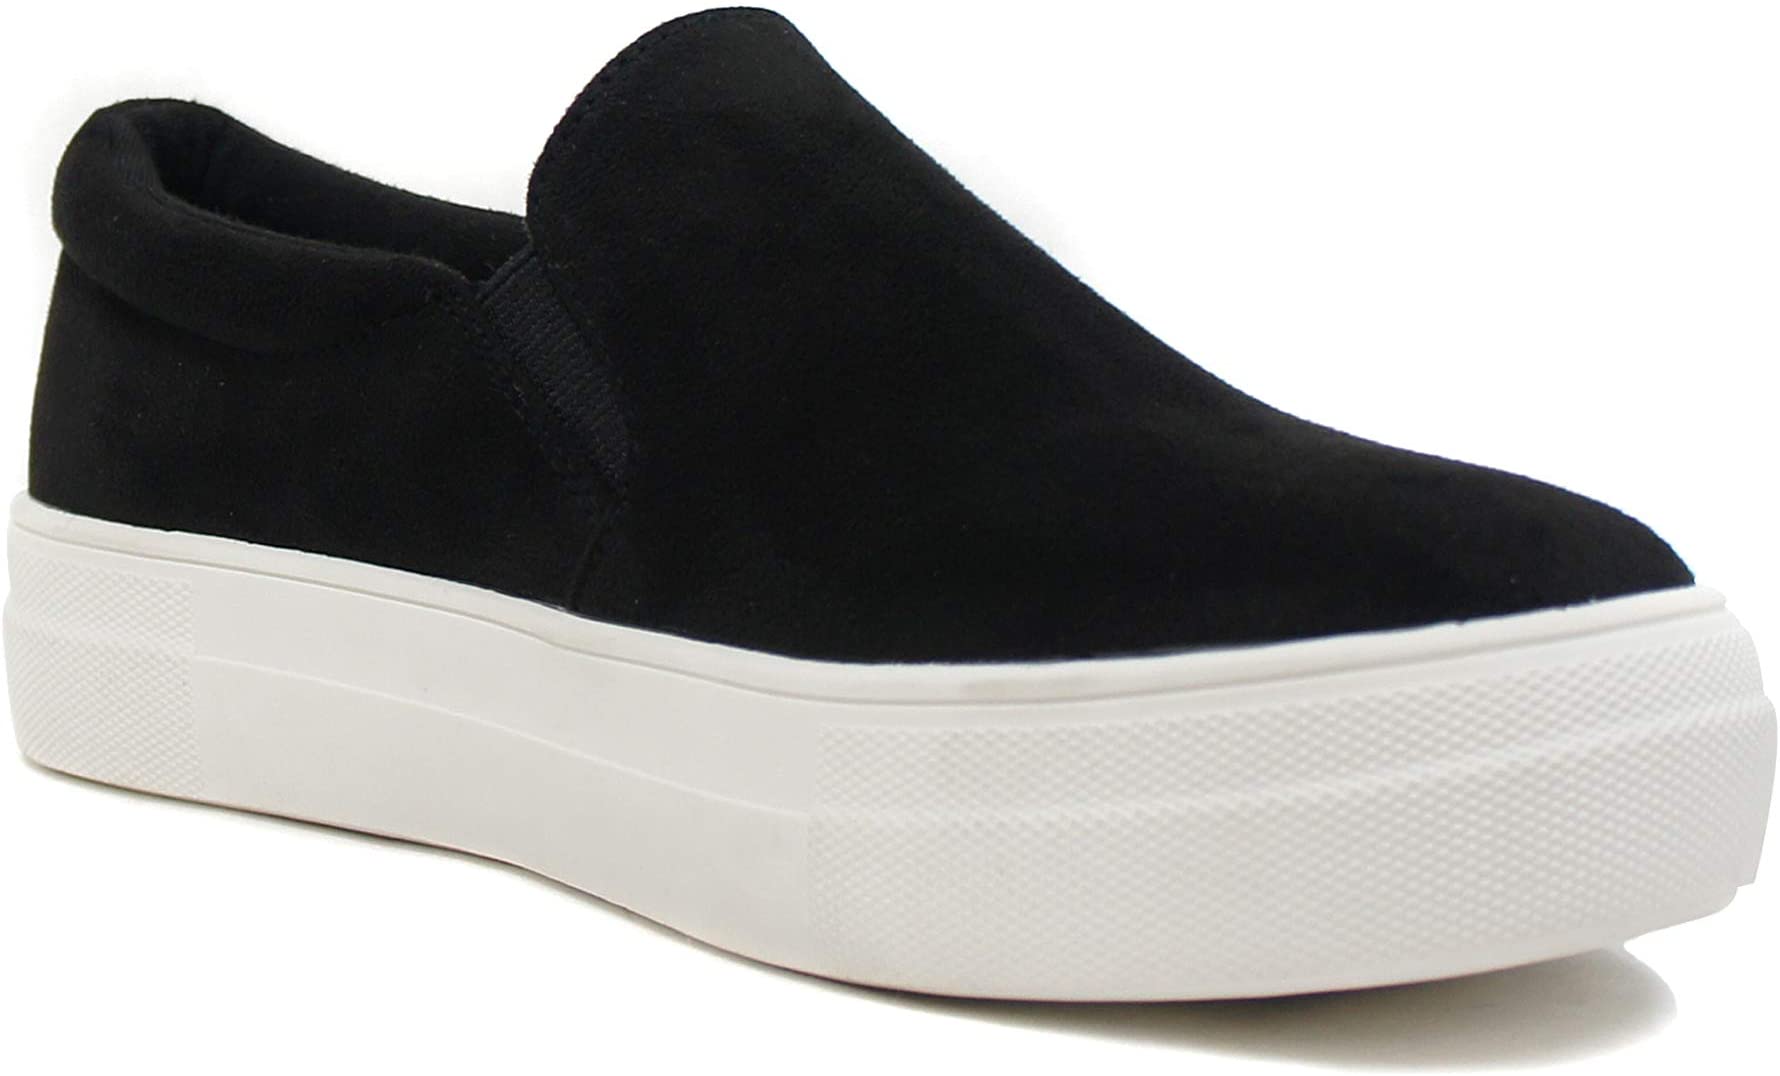 Soda Flat Women Shoes Slip On Loafers Casual Sneakers Memory Foam Insoles Hidden Platform / Flatform Round Toe HIKE-G Black Suede 10 - image 1 of 3